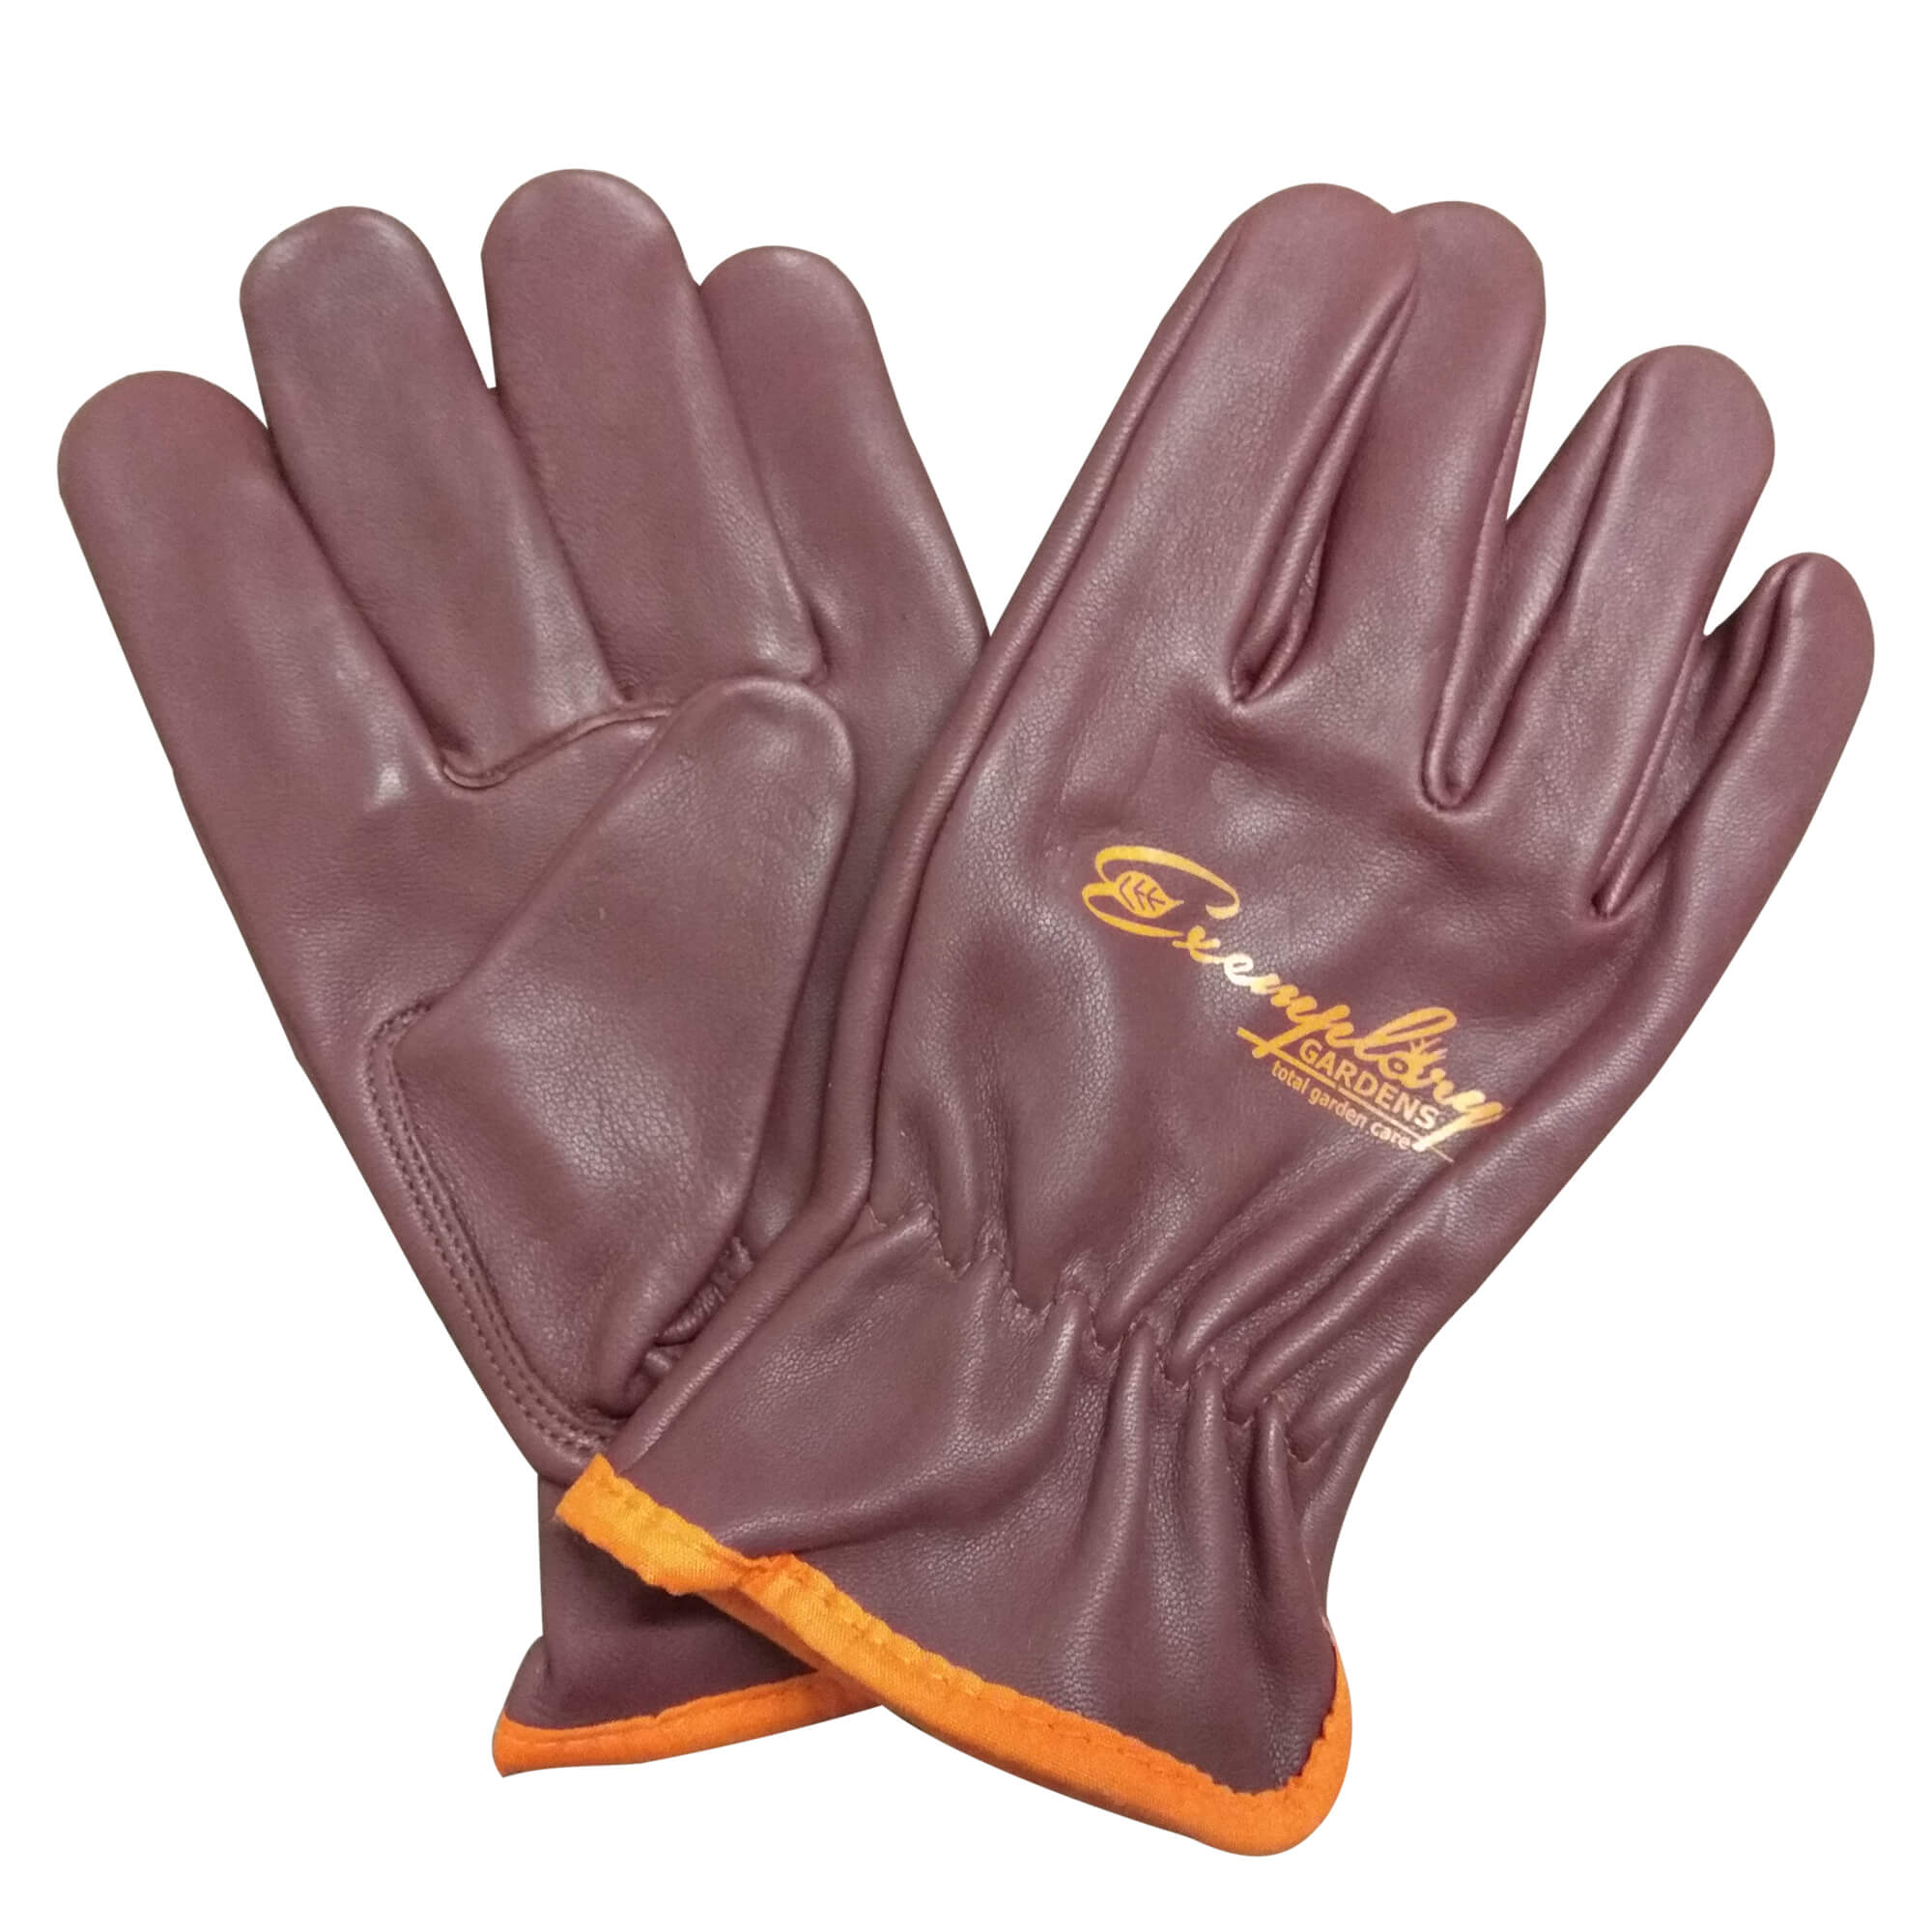 Goatskin Leather Work Gloves